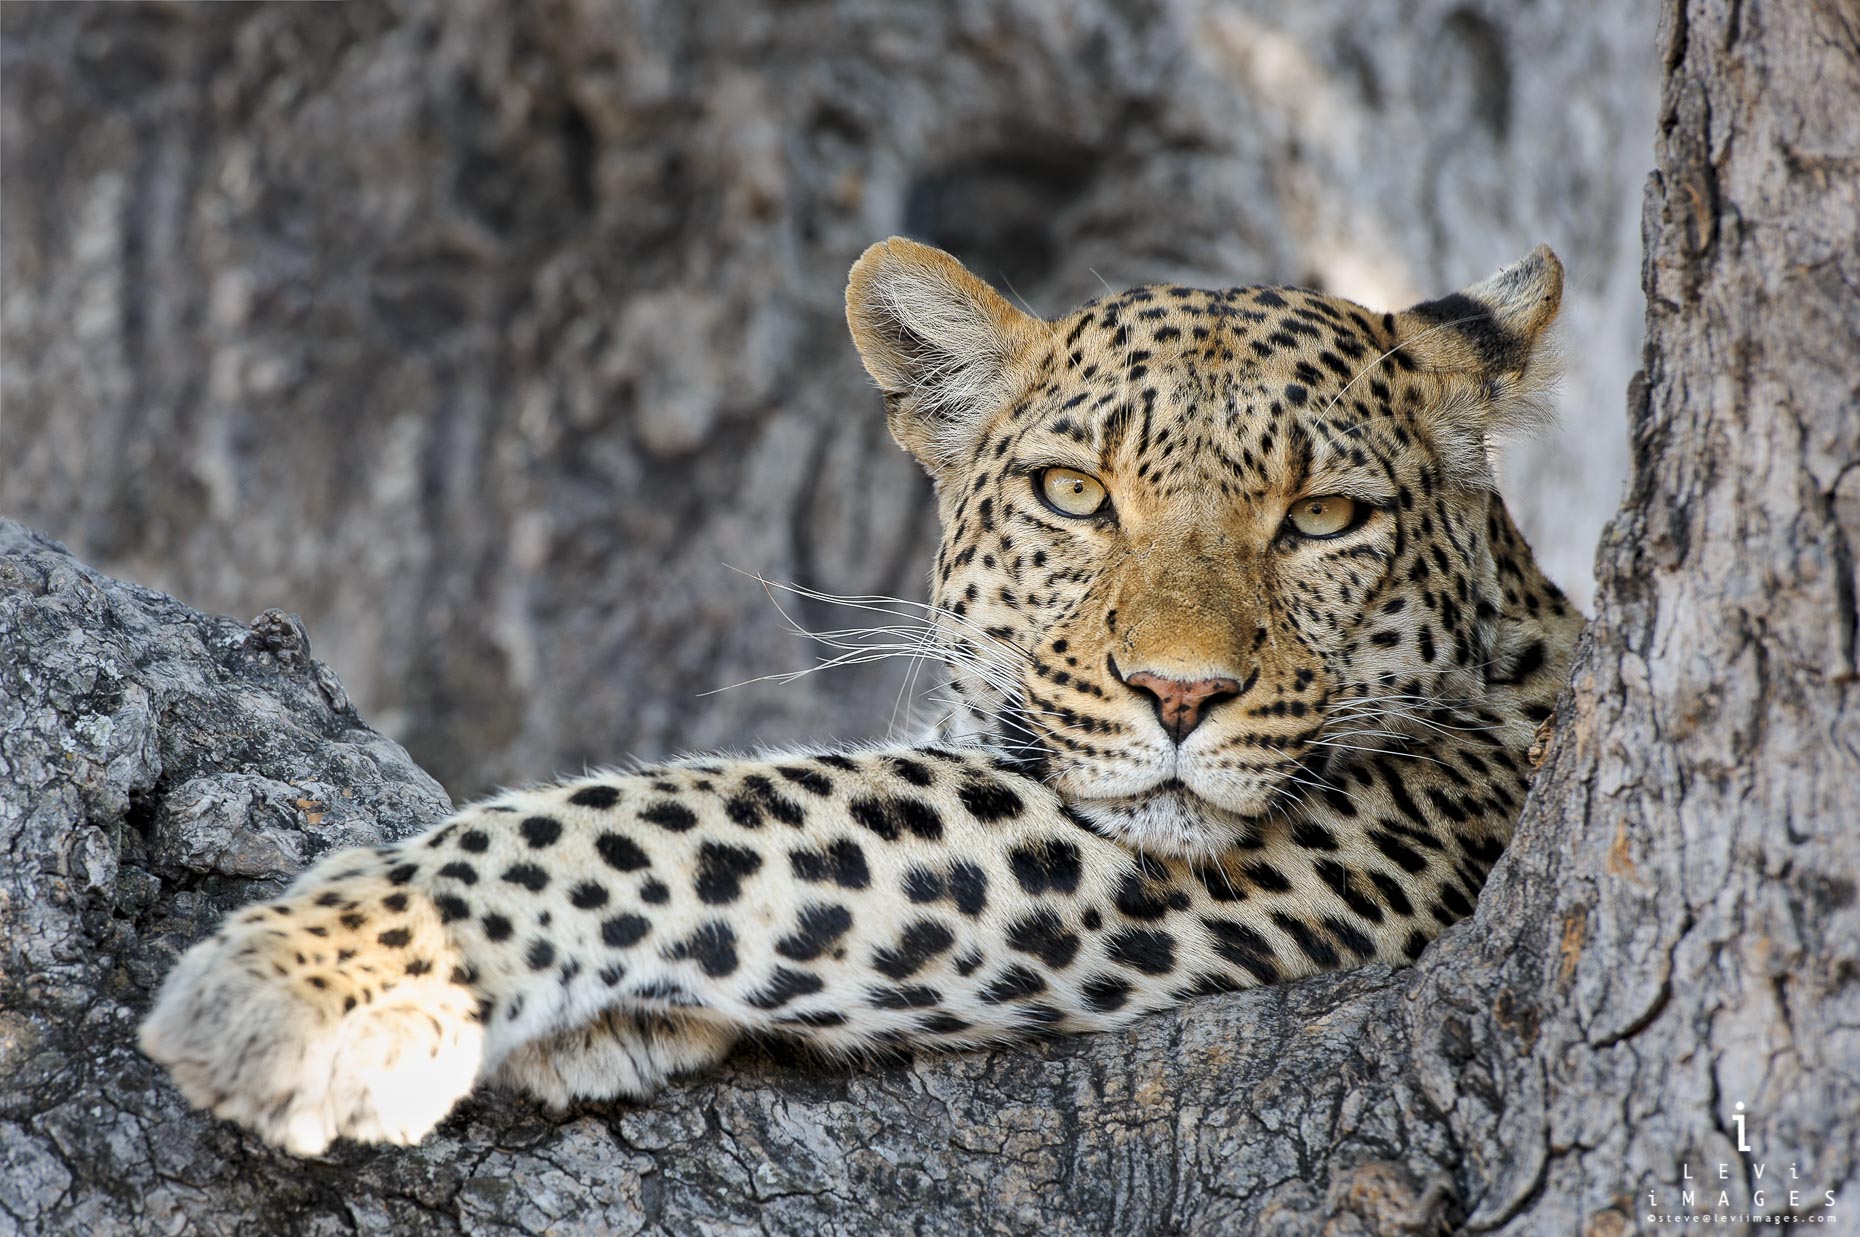 Legendary Legadema leopard (Panthera pardus) in tree. Botswana, Africa